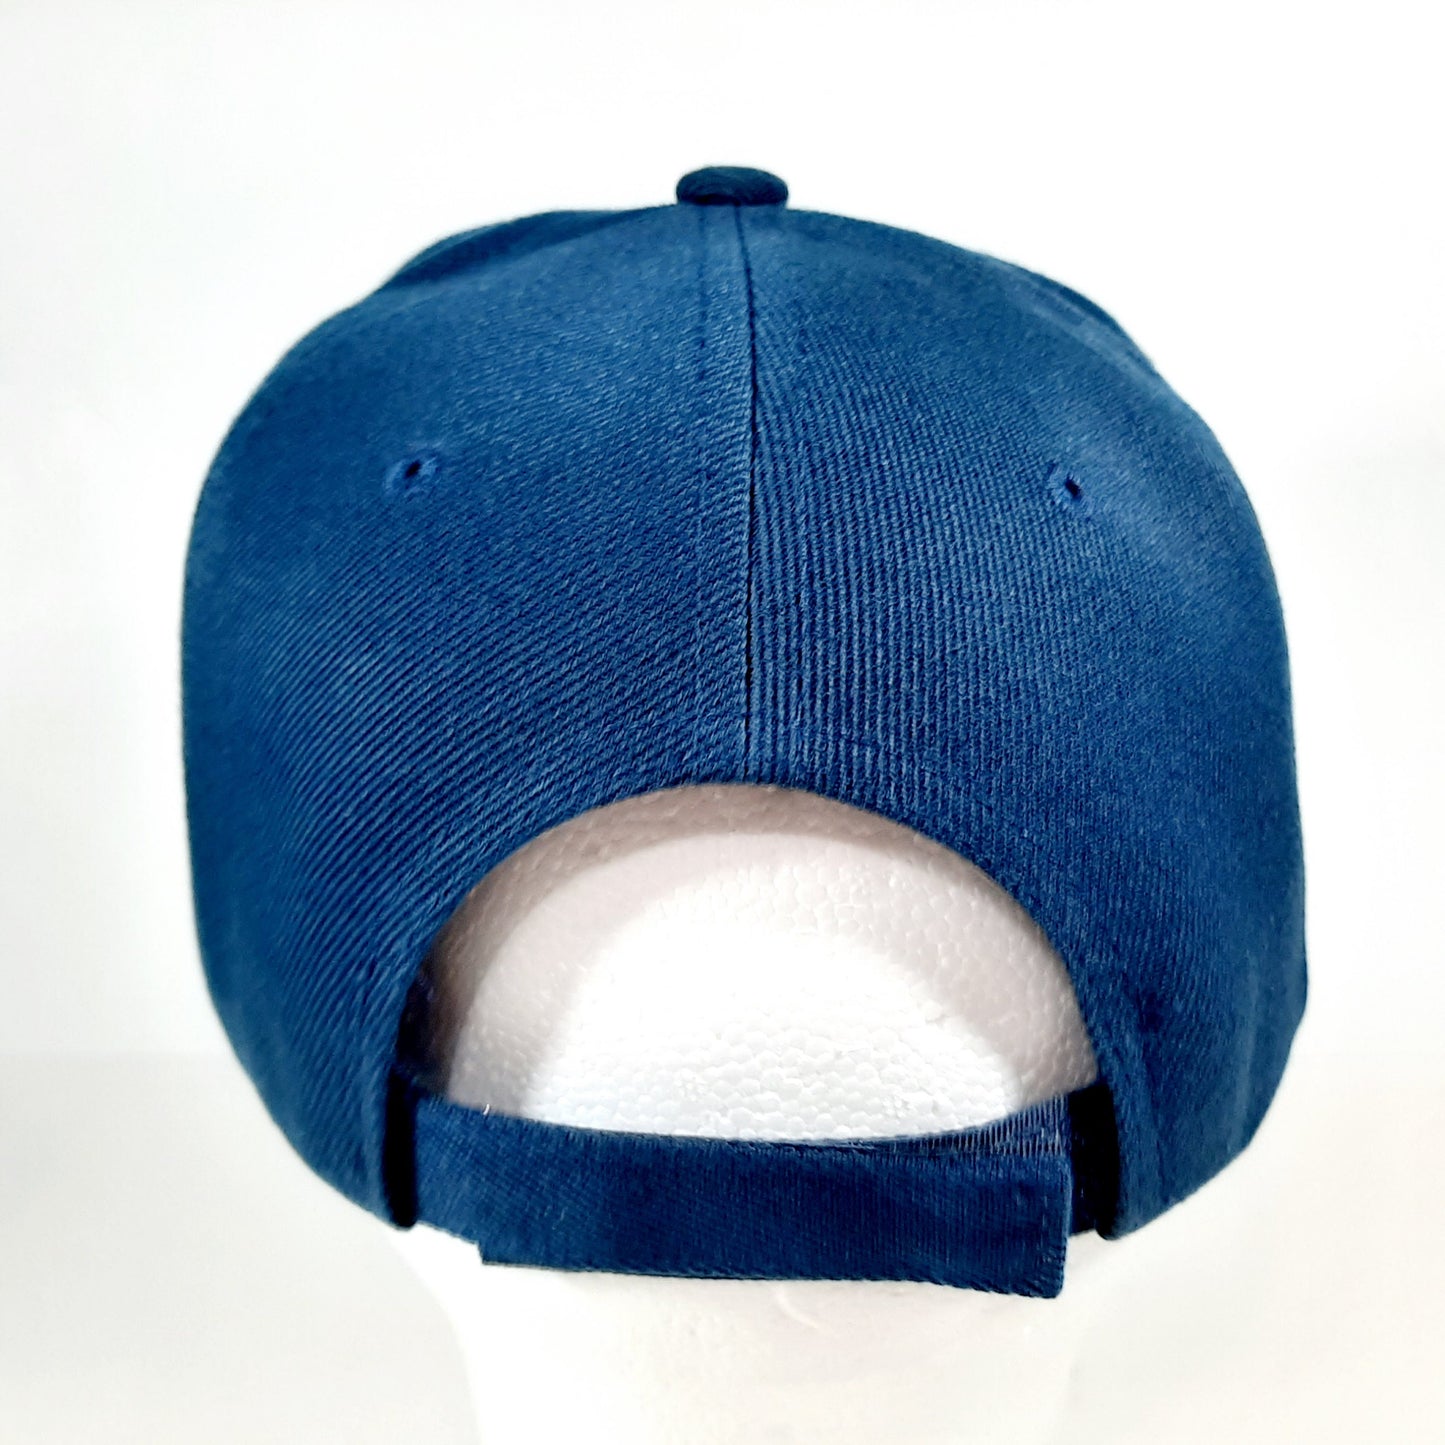 U.S. Navy SCPO Retired Patch Hat Baseball Cap Adjustable Navy Blue Acrylic